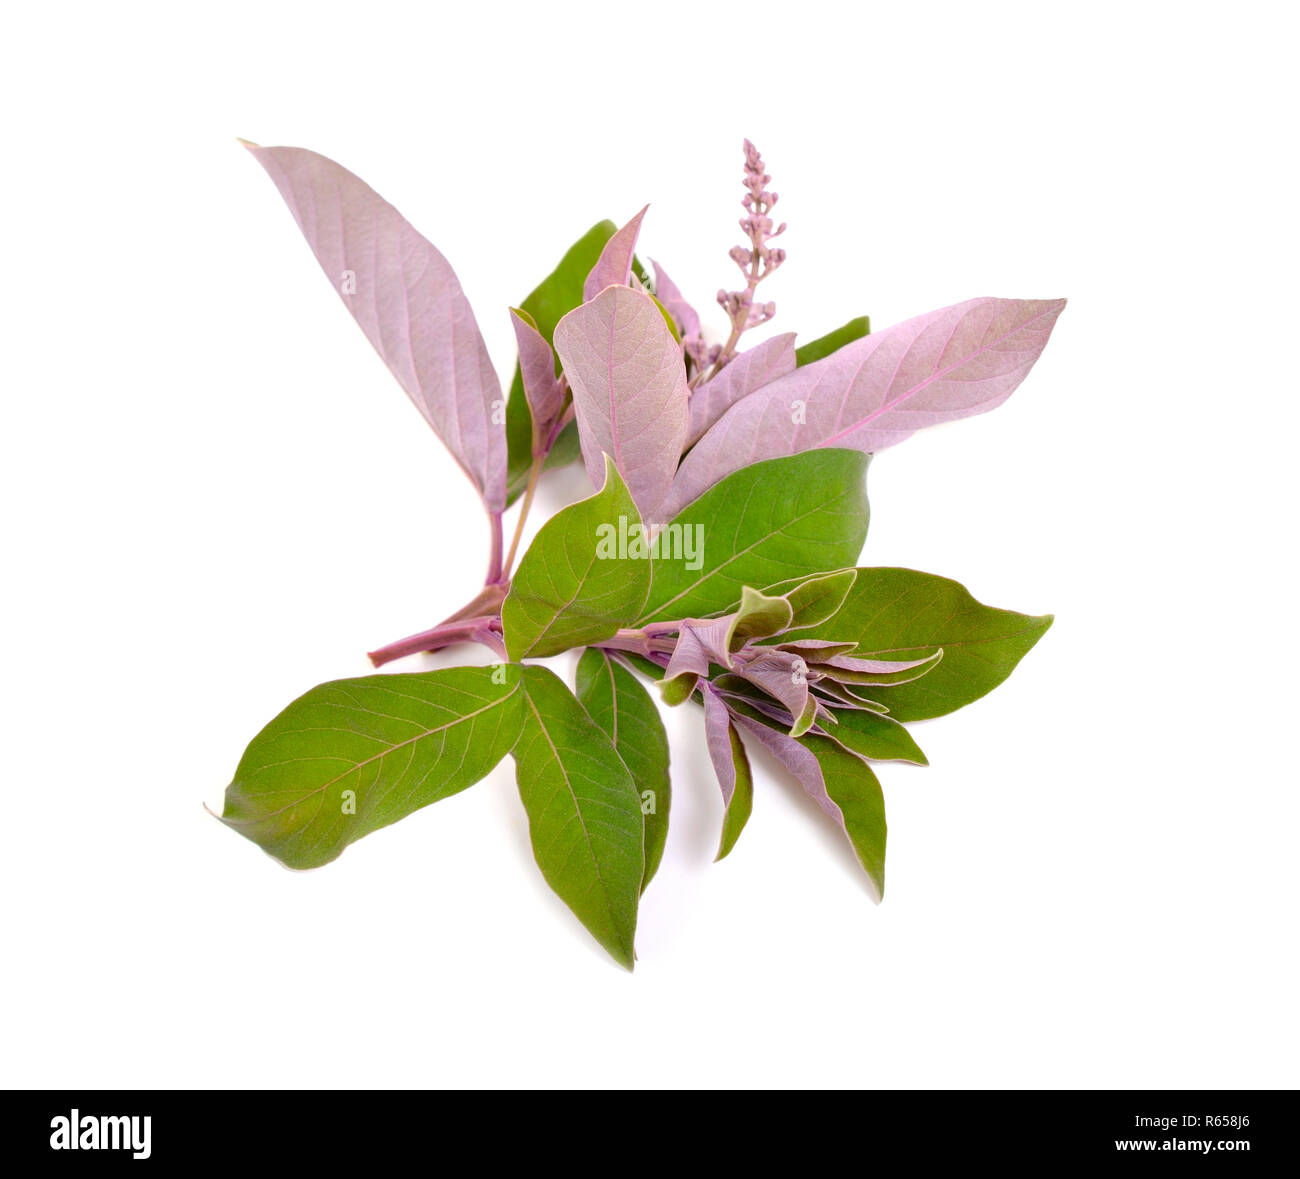 Vitex trifolia var purpurea. Isolated on white background. Stock Photo